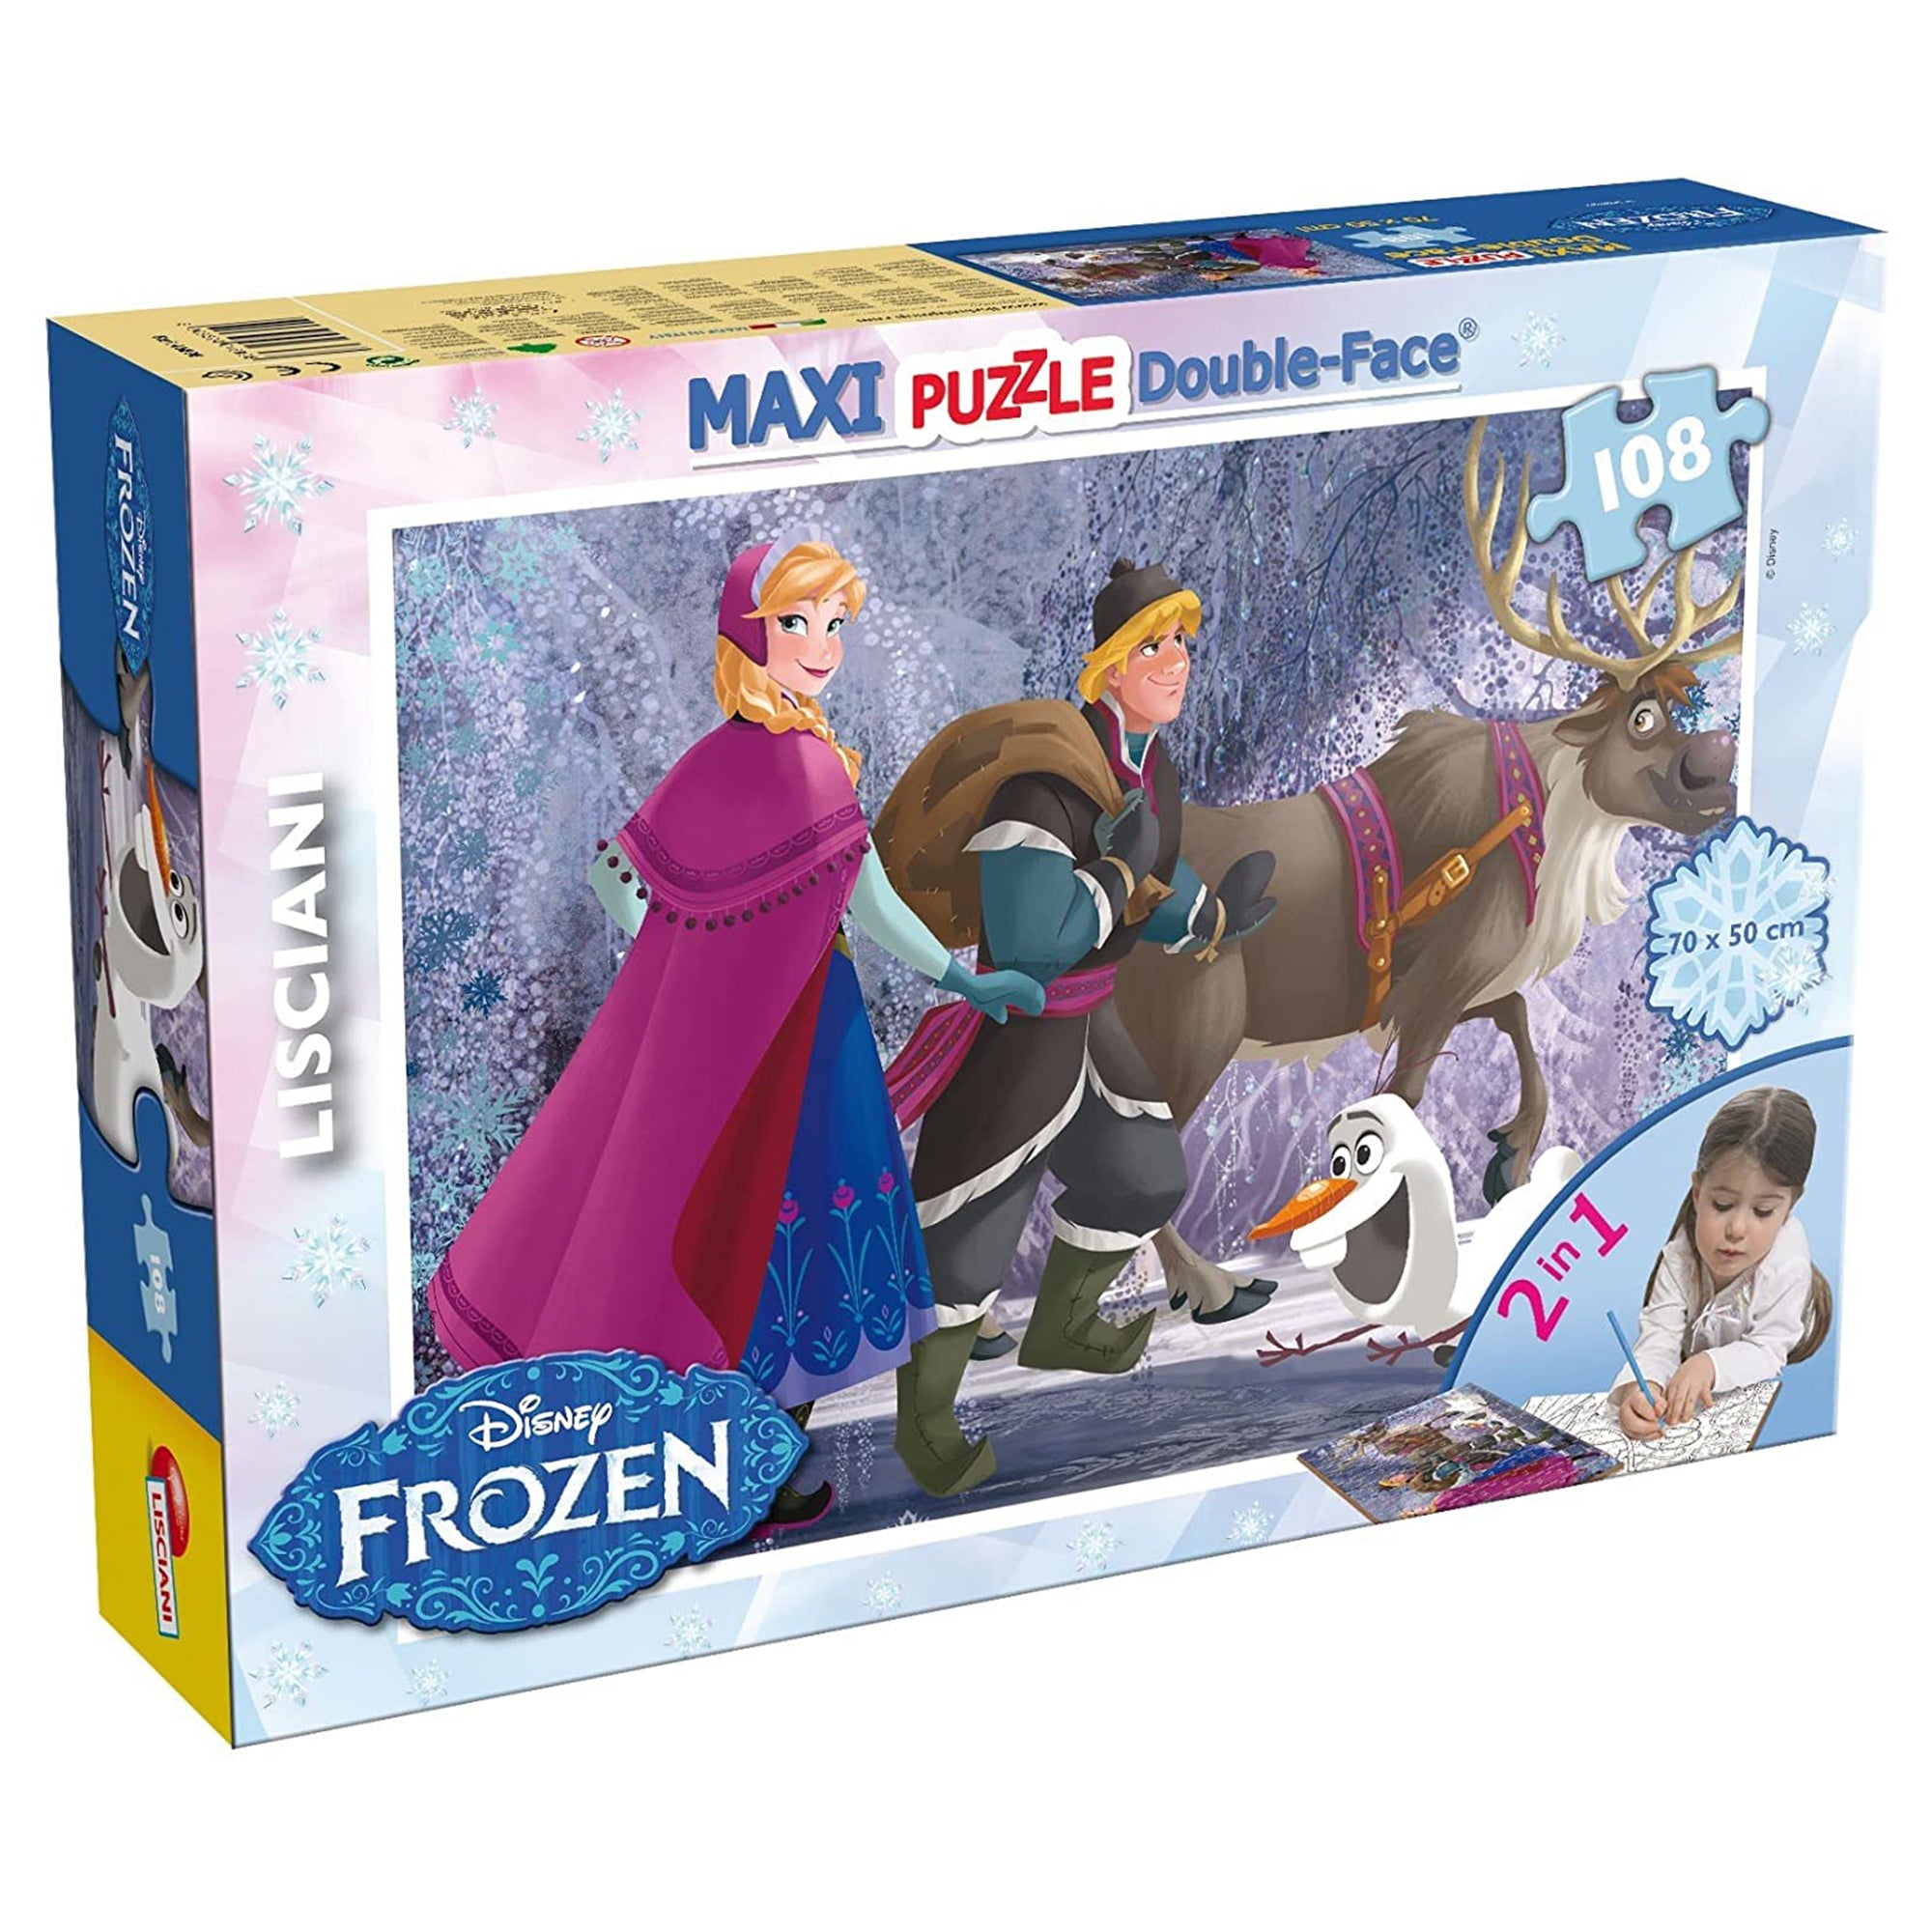 Puzzle maxi double-face Disney Frozen Elsa e Anna 108 pz retro colorabile 3368